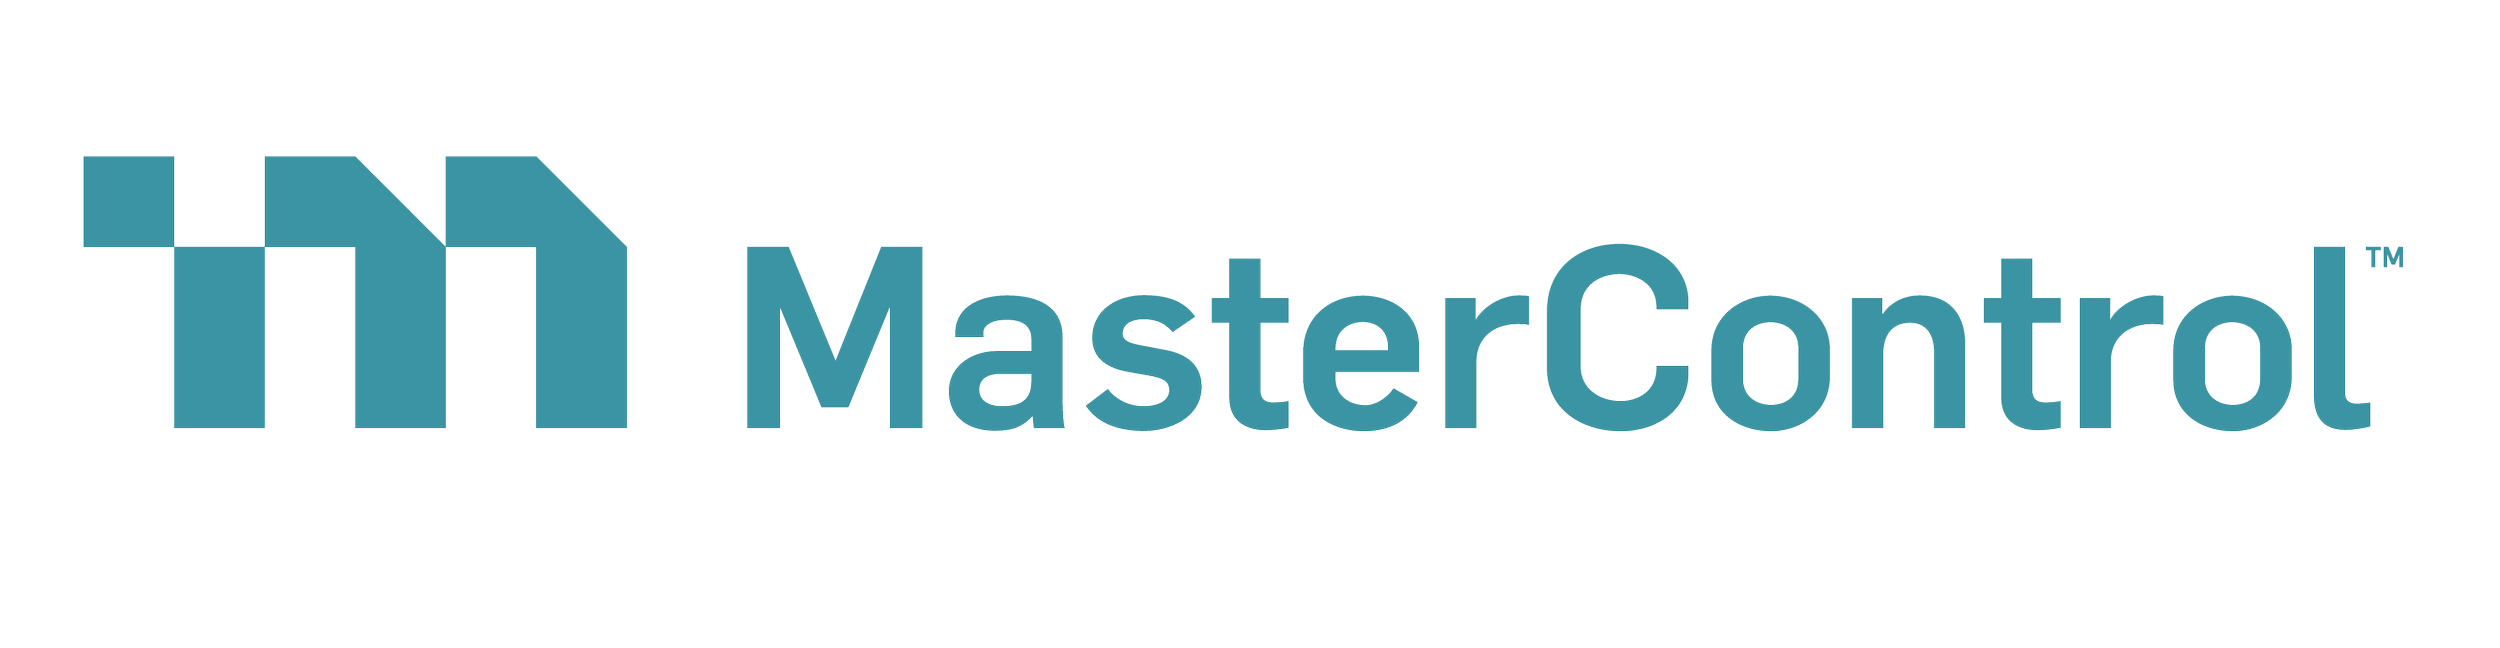 MasterControl - logo_hz_teal.png